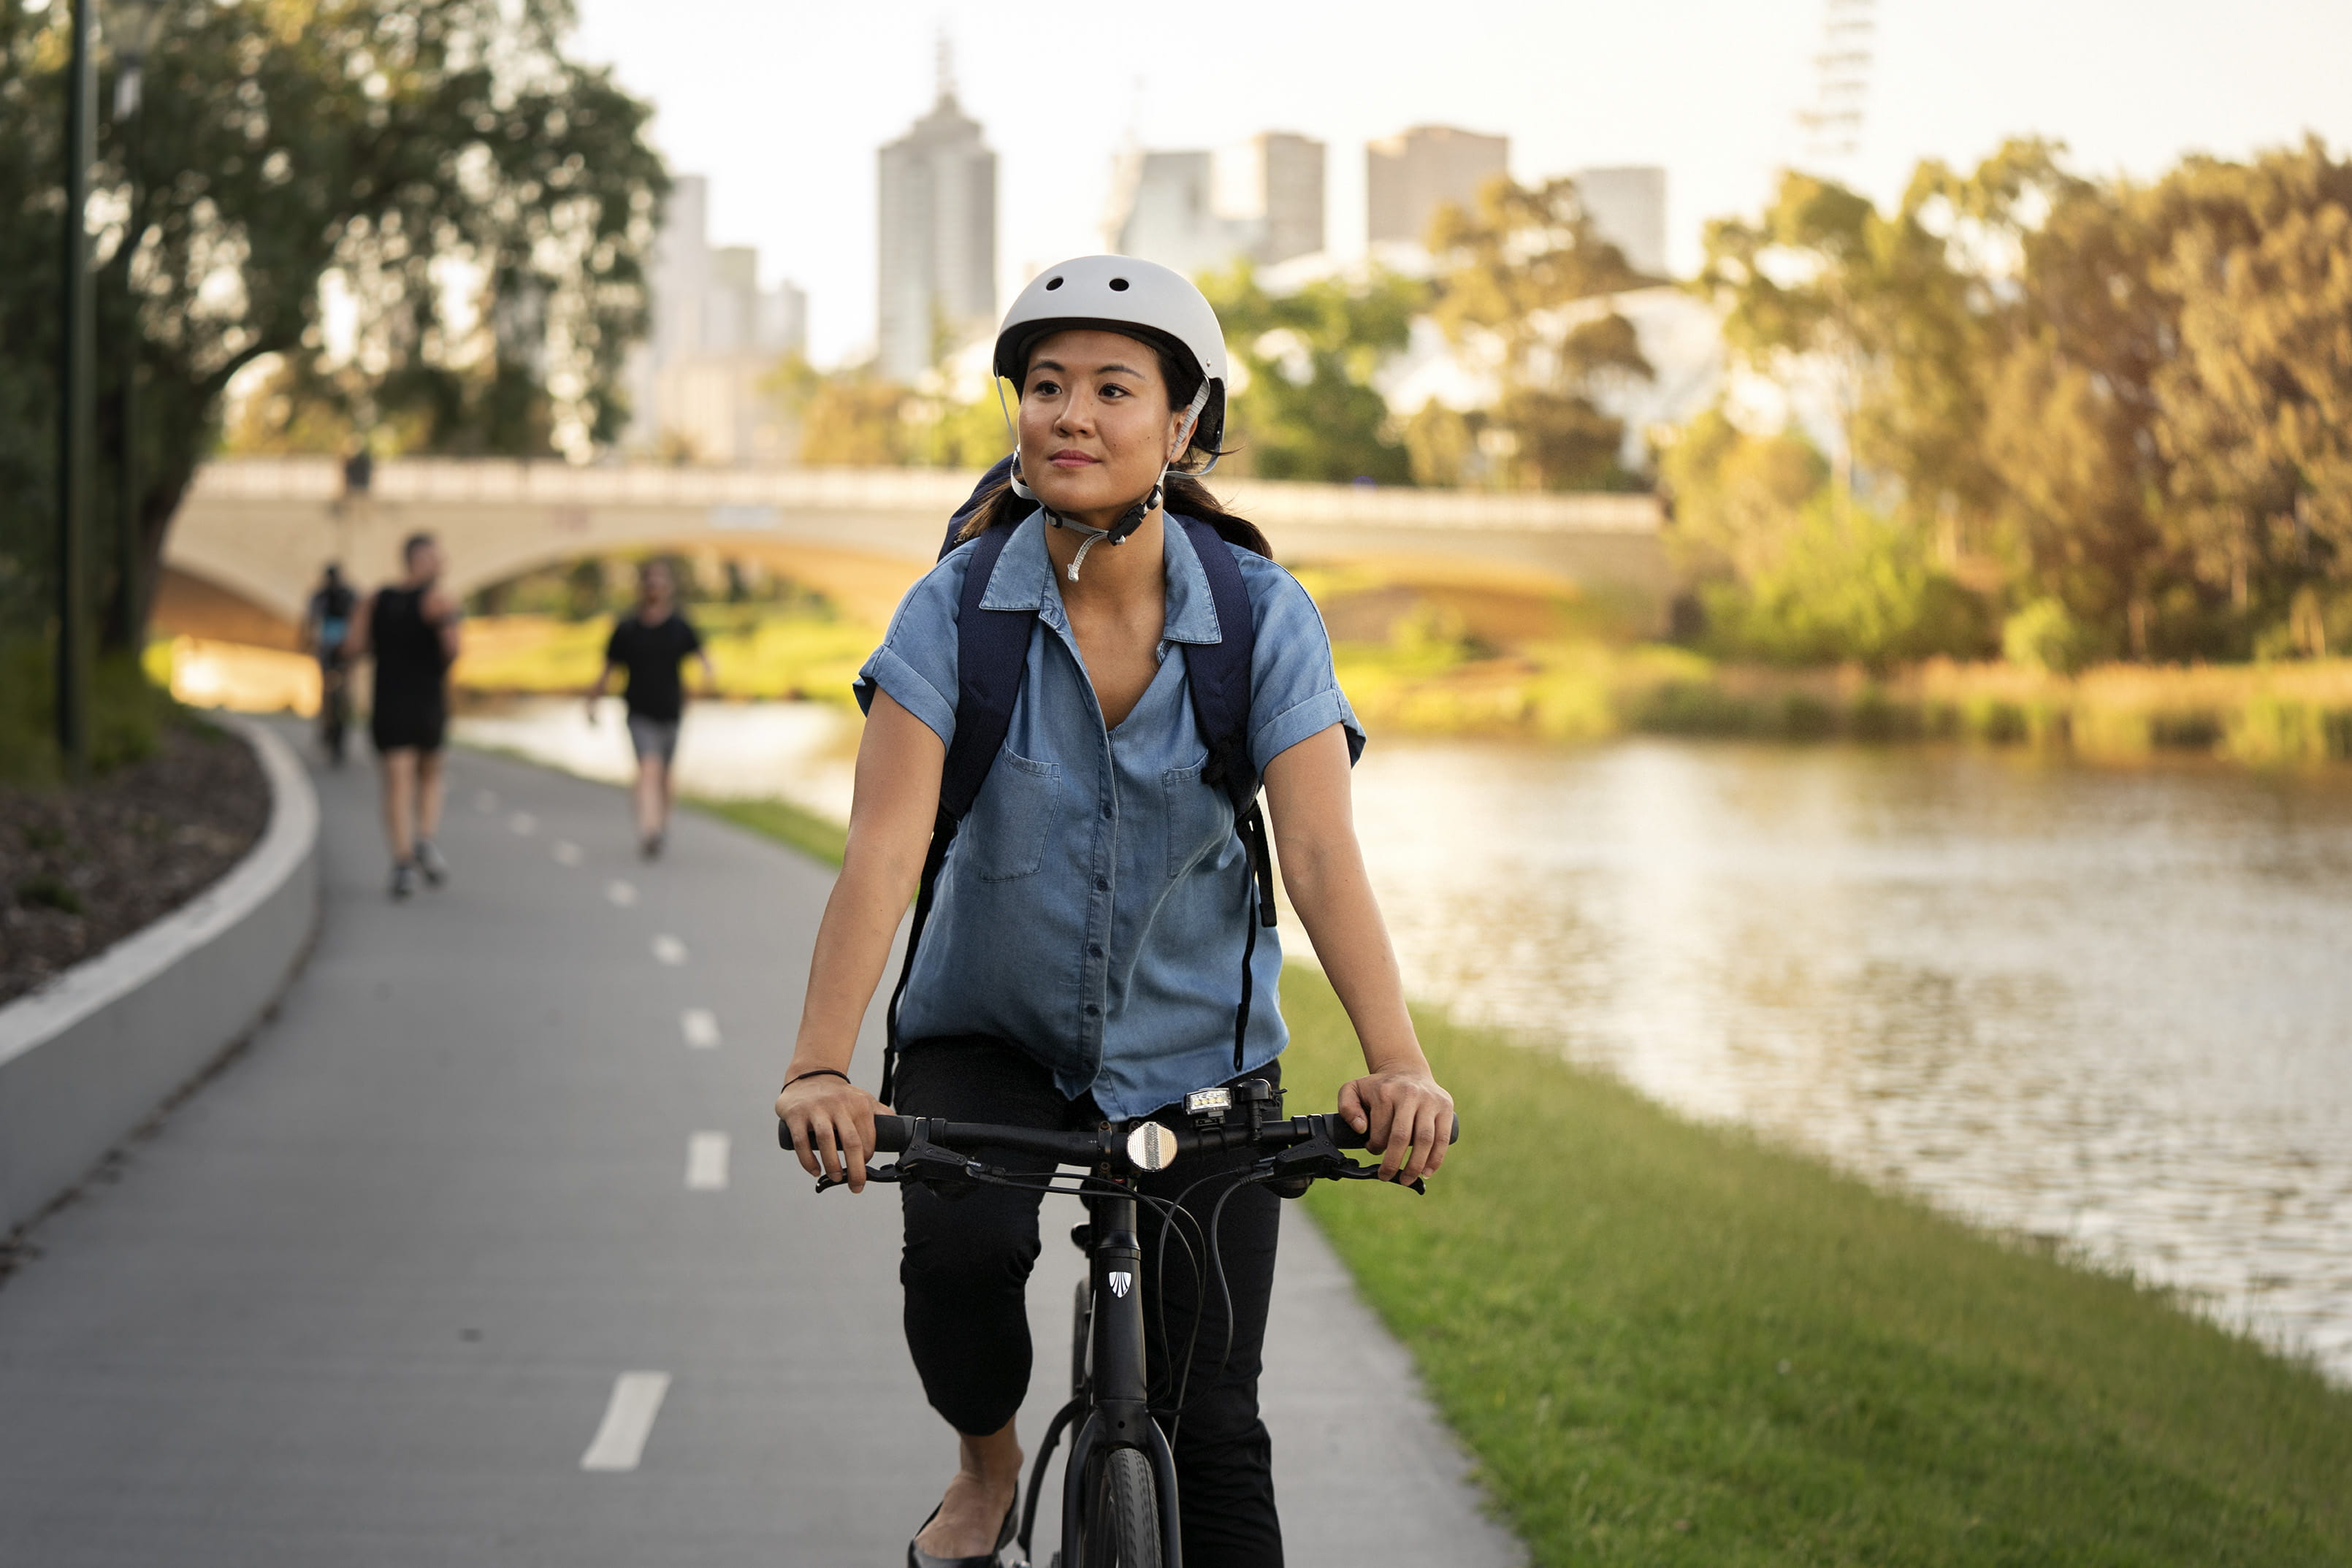 Woman riding a bike on shared path